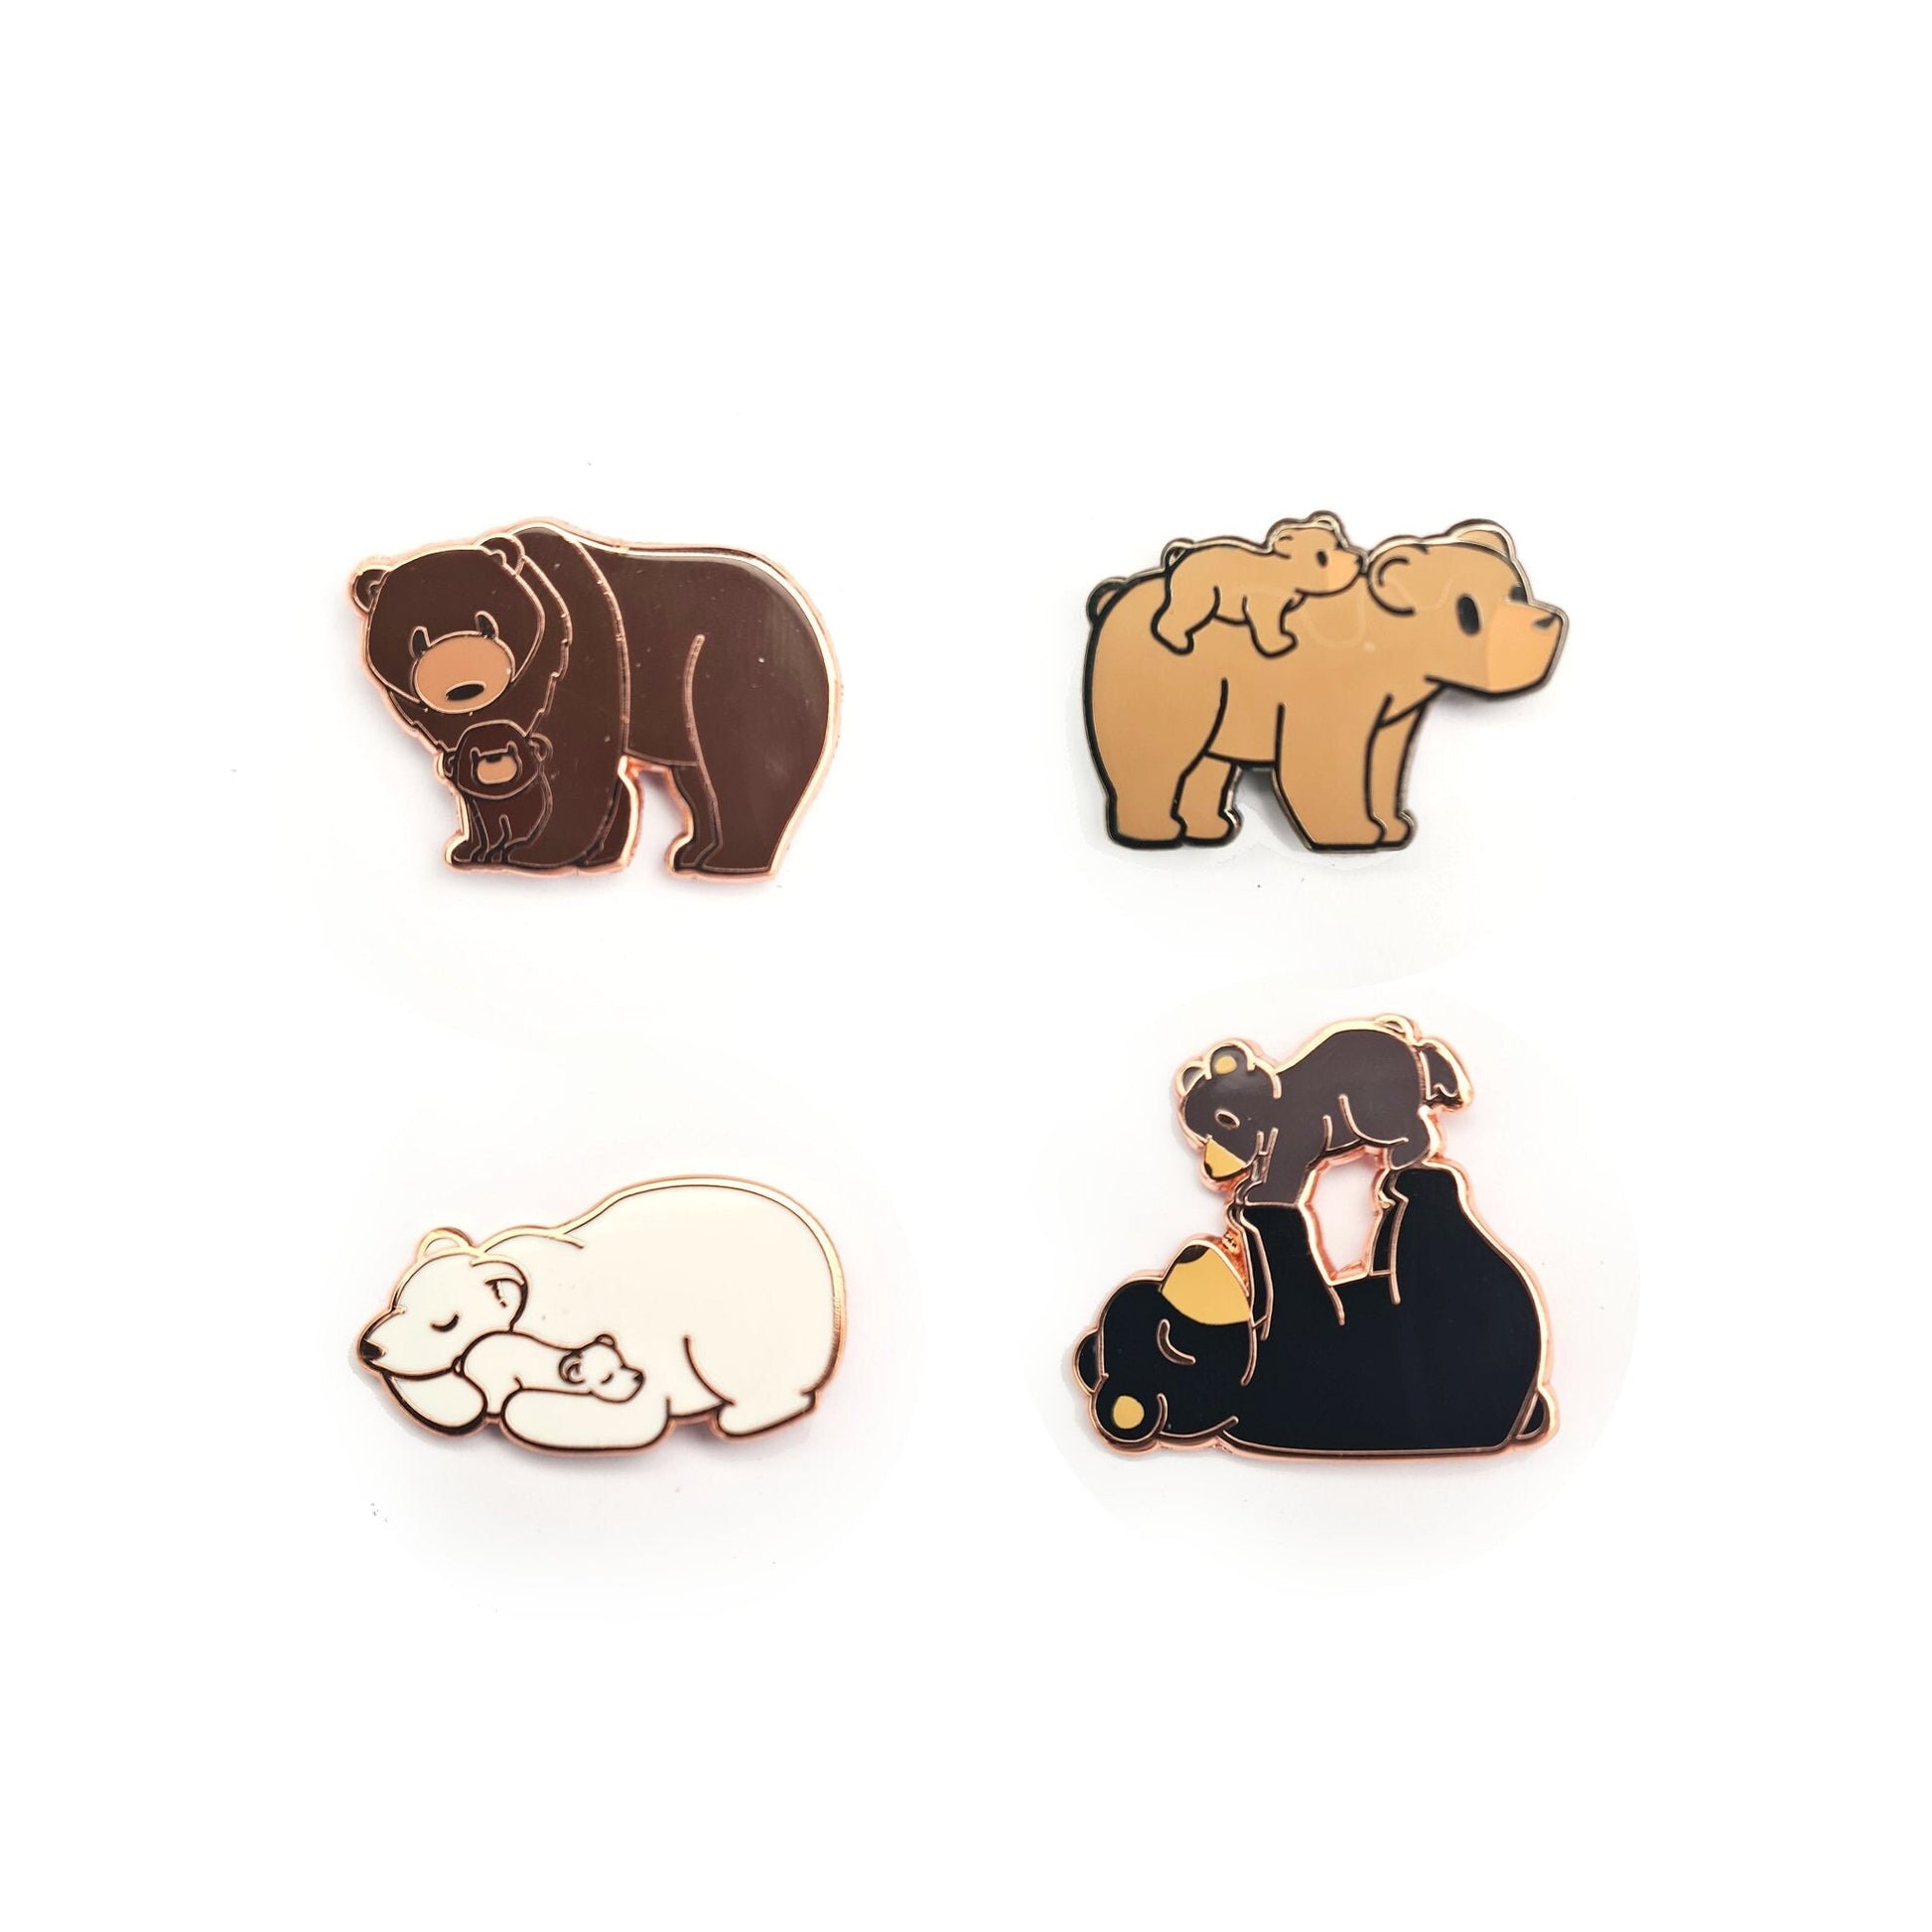 Mama Bear and Baby Bear, Sleeping - Small Enamel Pin, Mother’s Day Gift, Pins, Brooches & Lapel Pins